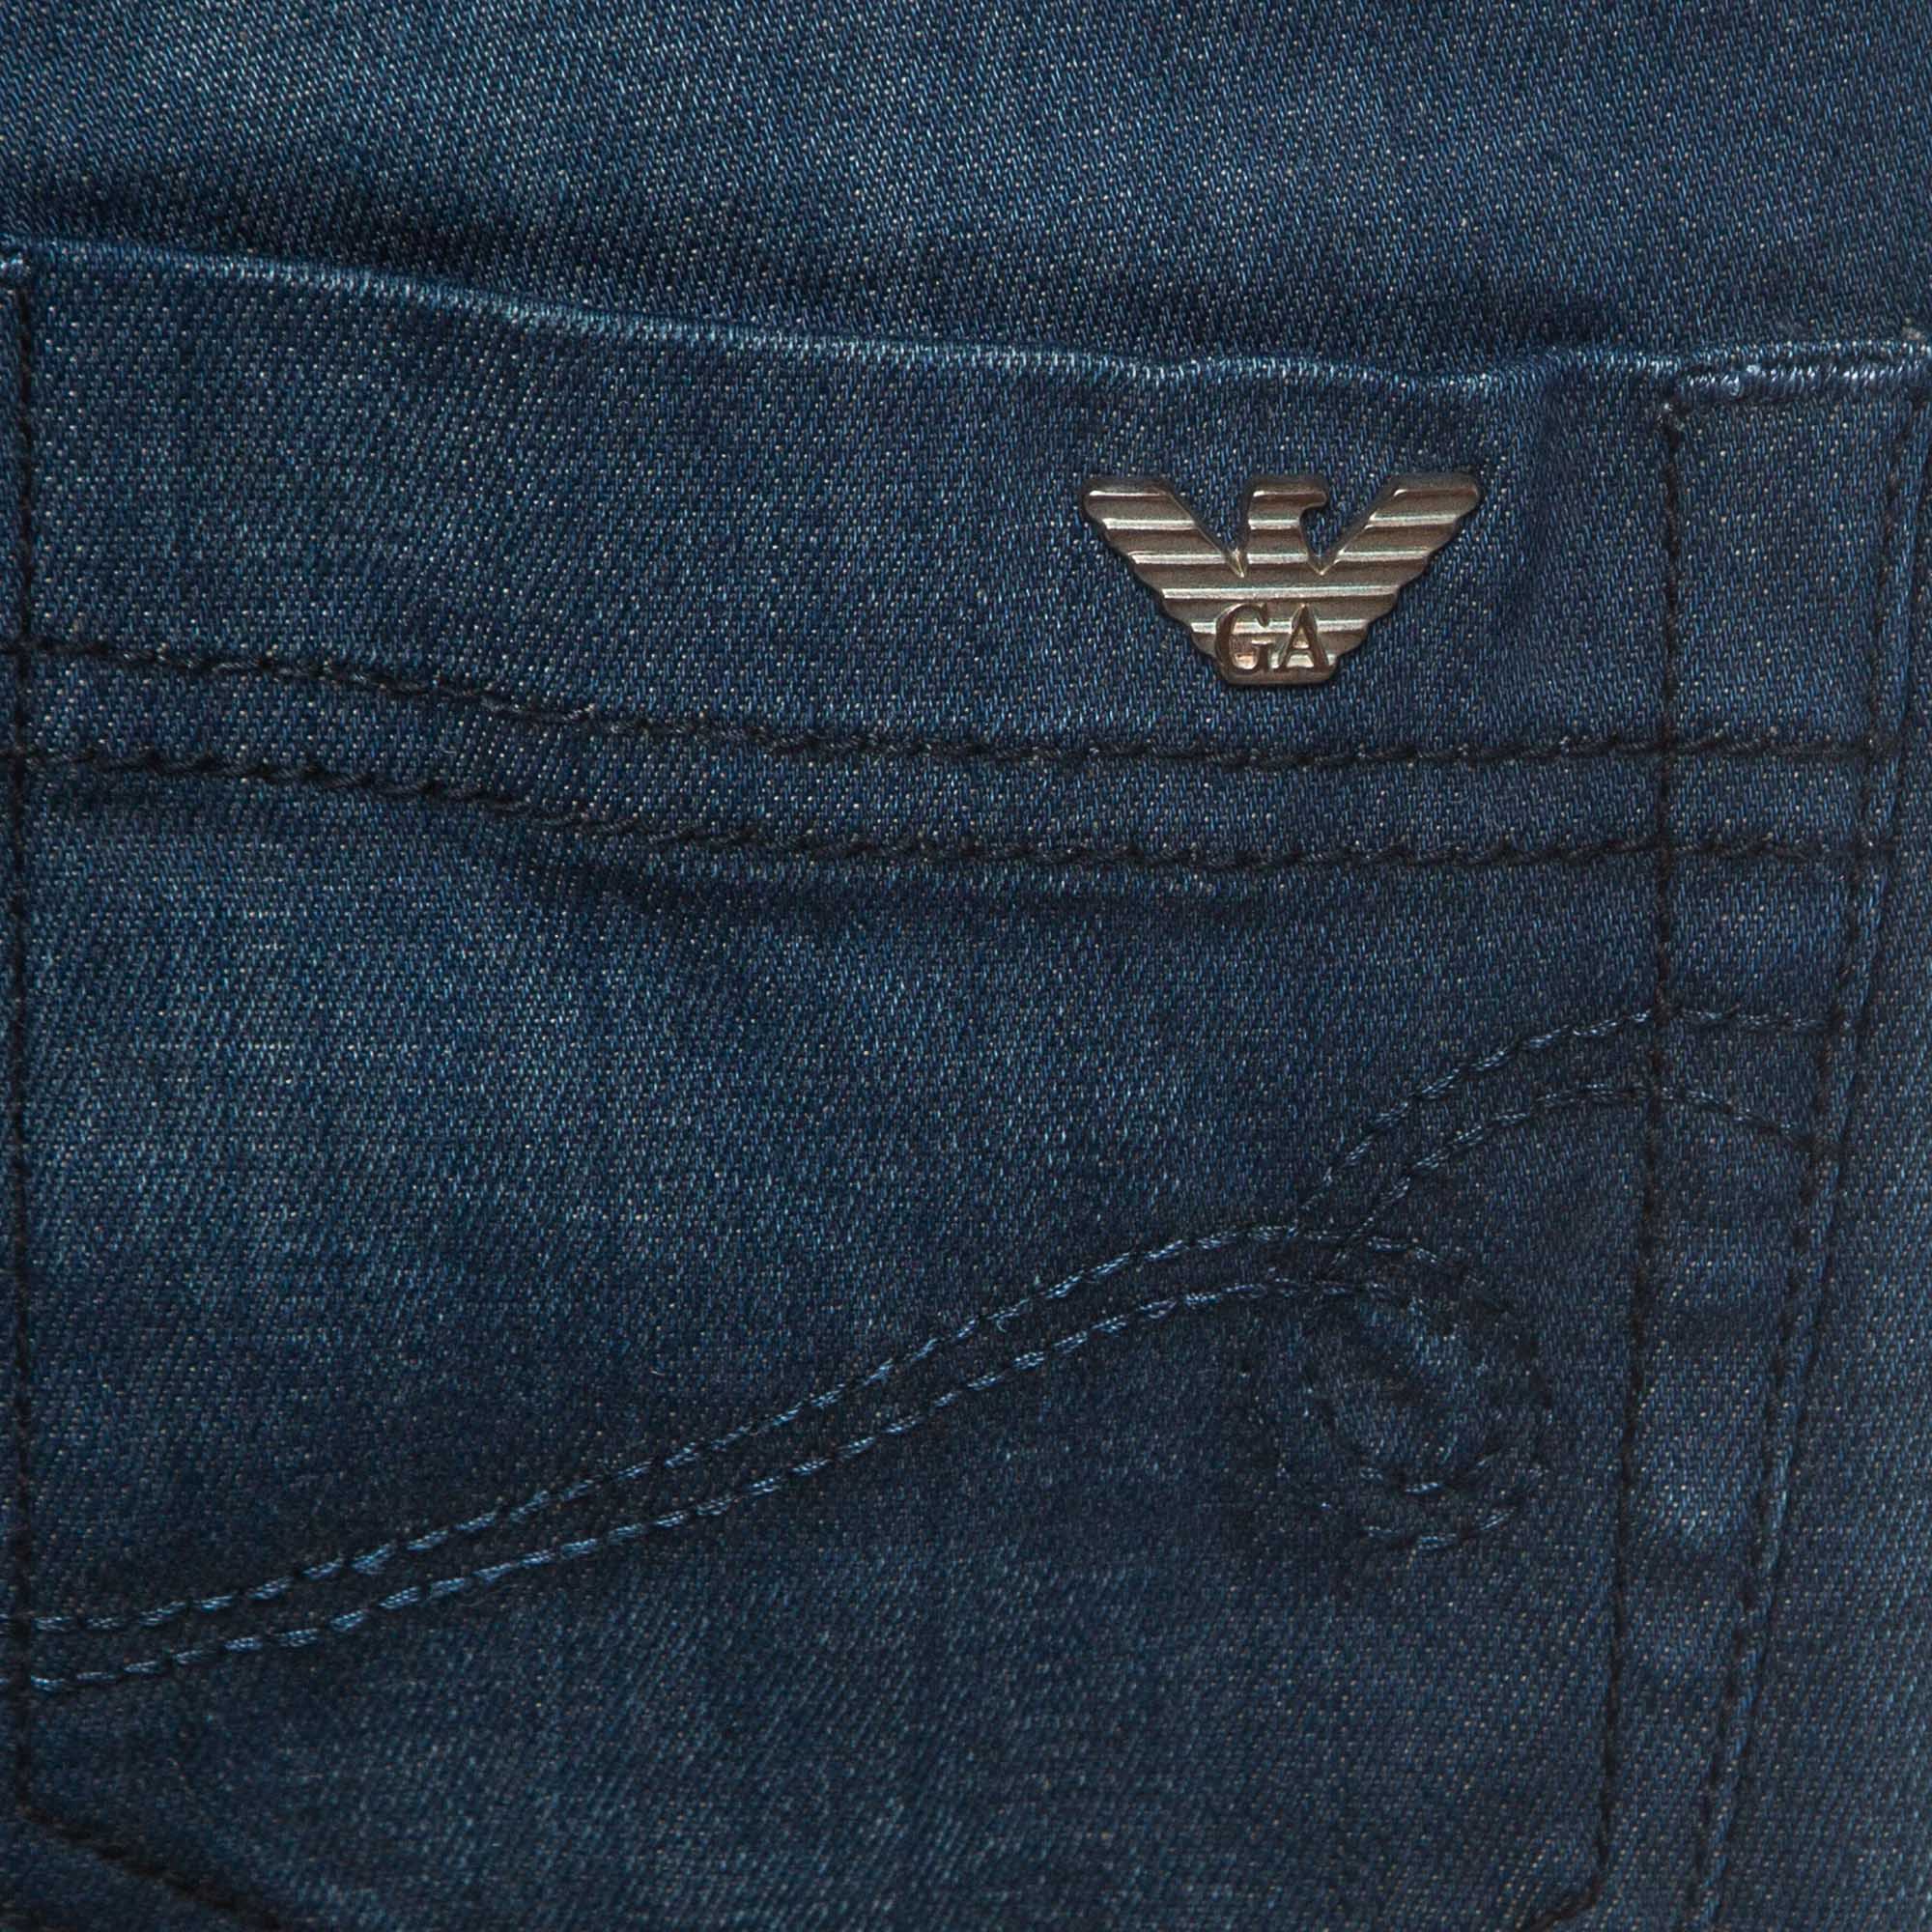 Emporio Armani Dark Blue Pocket Detailed Dakota Jeans M Waist 28